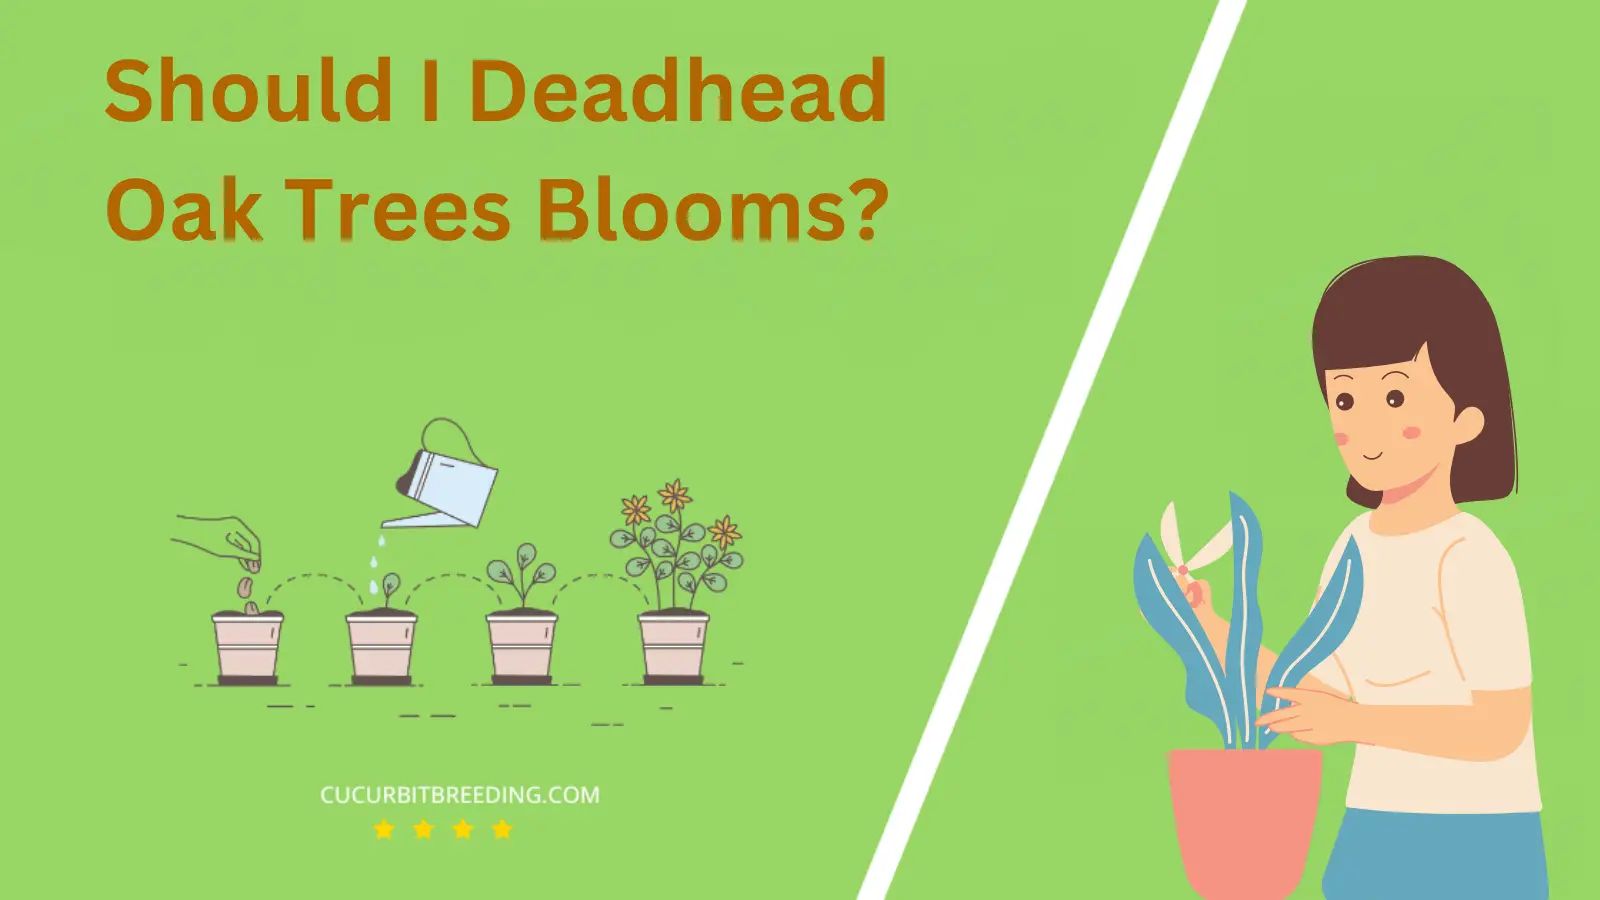 Should I Deadhead Oak Trees Blooms?